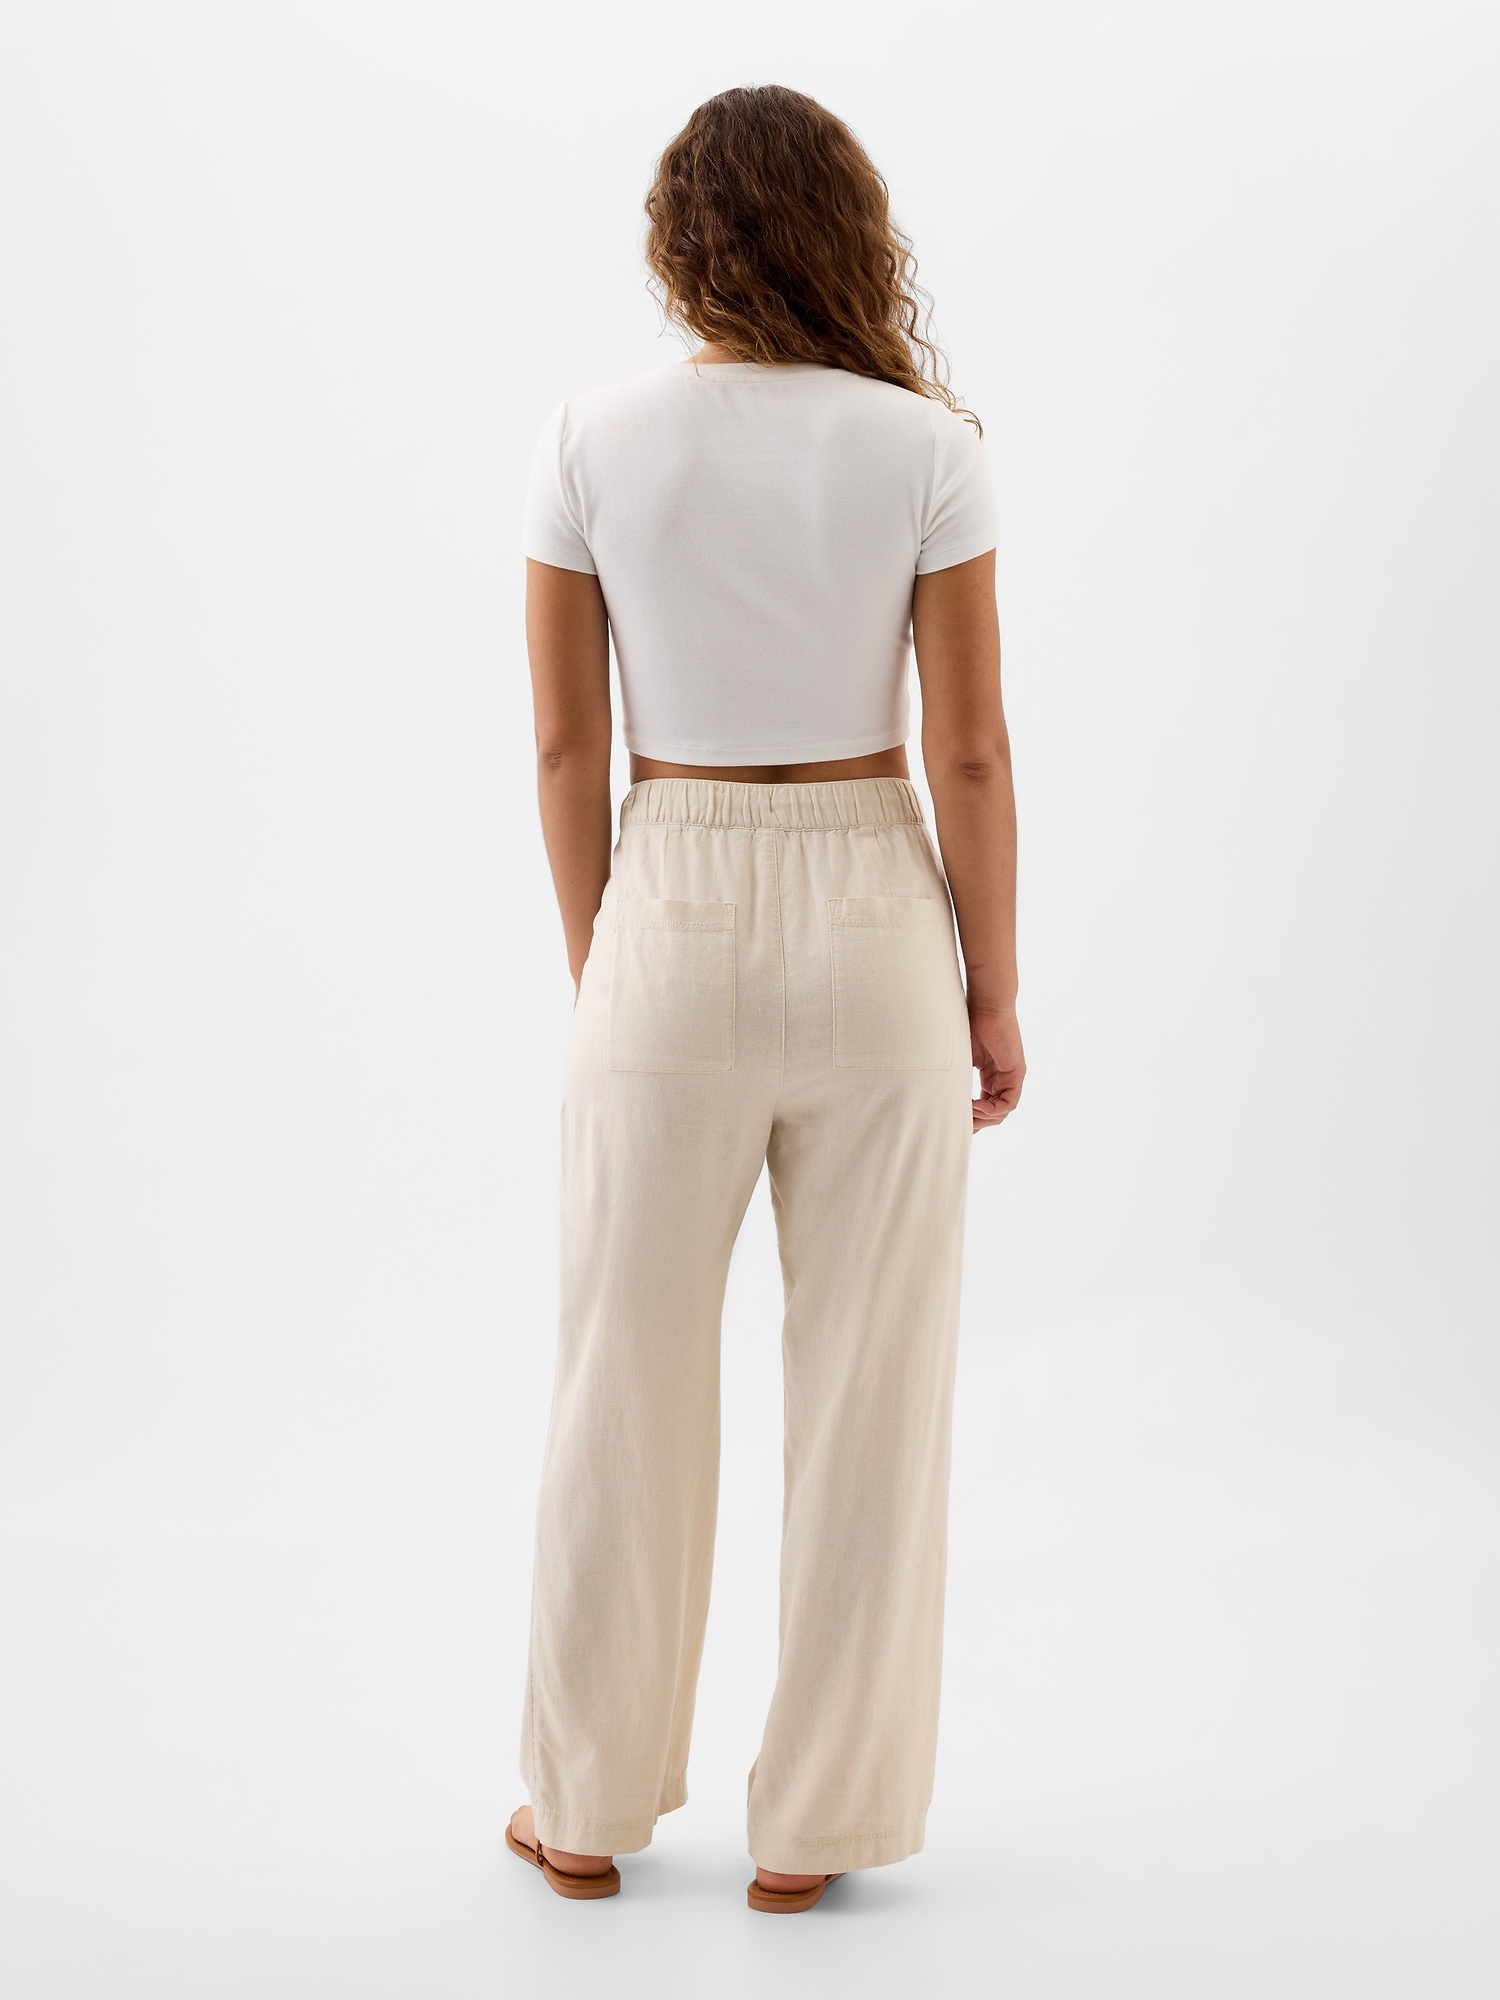 Buy Linen Palazzo Pants, High Waisted Pants, Linen Trousers Women